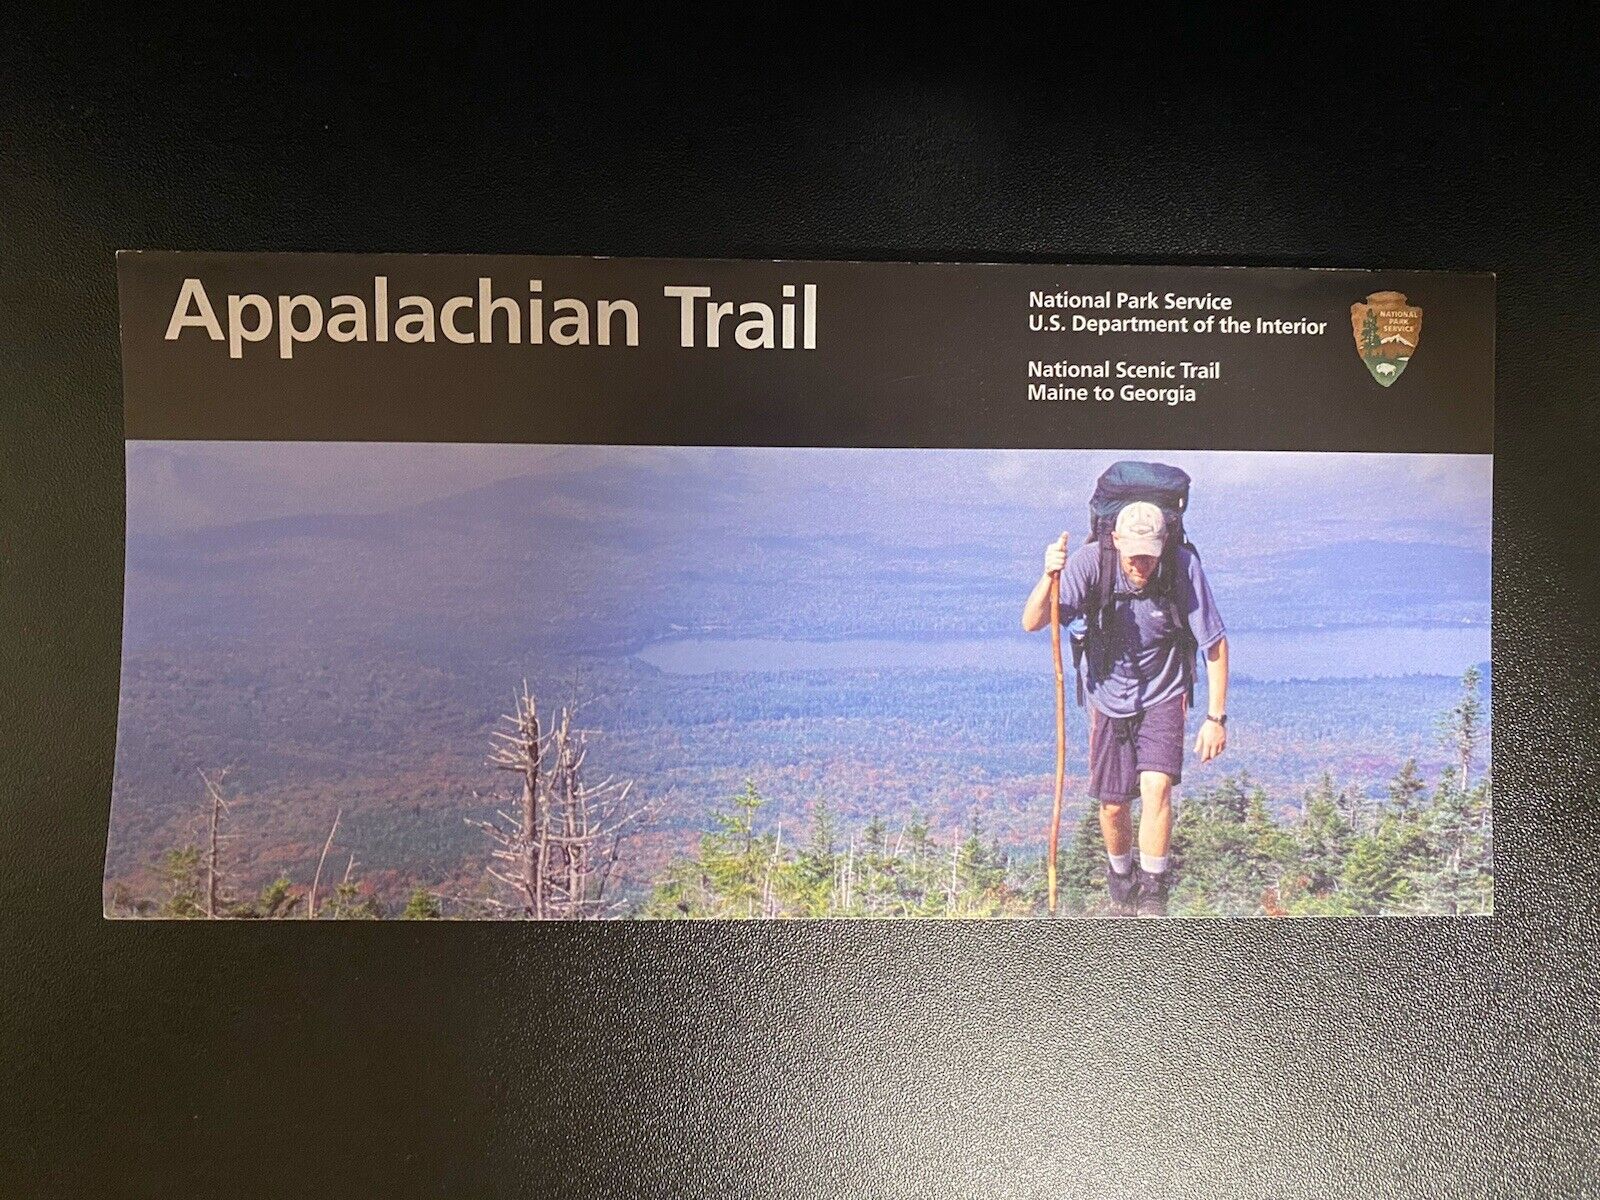 Appalachian Trail; National Park Service Brochure